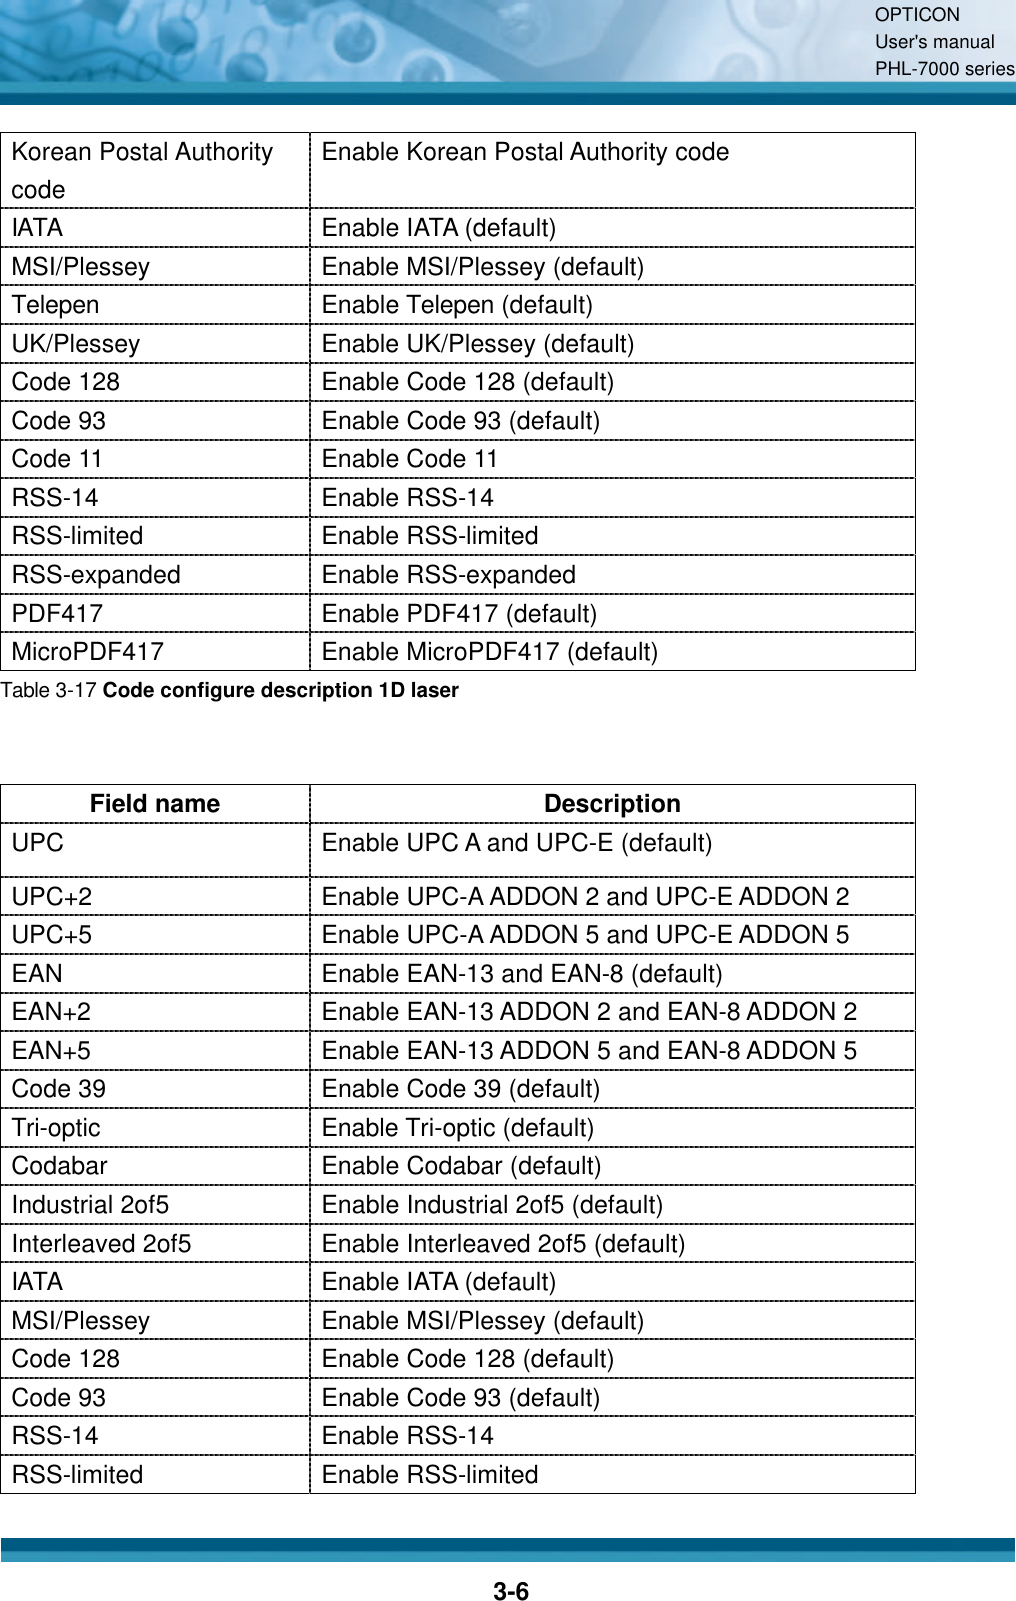 OPTICON User&apos;s manual PHL-7000 series    3-6 Korean Postal Authority code Enable Korean Postal Authority code IATA Enable IATA (default) MSI/Plessey Enable MSI/Plessey (default) Telepen Enable Telepen (default) UK/Plessey Enable UK/Plessey (default) Code 128 Enable Code 128 (default) Code 93 Enable Code 93 (default) Code 11 Enable Code 11 RSS-14 Enable RSS-14 RSS-limited Enable RSS-limited RSS-expanded Enable RSS-expanded PDF417 Enable PDF417 (default) MicroPDF417 Enable MicroPDF417 (default) Table 3-17 Code configure description 1D laser  Field name Description UPC Enable UPC A and UPC-E (default) UPC+2 Enable UPC-A ADDON 2 and UPC-E ADDON 2 UPC+5 Enable UPC-A ADDON 5 and UPC-E ADDON 5 EAN Enable EAN-13 and EAN-8 (default) EAN+2 Enable EAN-13 ADDON 2 and EAN-8 ADDON 2 EAN+5 Enable EAN-13 ADDON 5 and EAN-8 ADDON 5 Code 39 Enable Code 39 (default) Tri-optic Enable Tri-optic (default) Codabar Enable Codabar (default) Industrial 2of5 Enable Industrial 2of5 (default) Interleaved 2of5 Enable Interleaved 2of5 (default) IATA Enable IATA (default) MSI/Plessey Enable MSI/Plessey (default) Code 128 Enable Code 128 (default) Code 93 Enable Code 93 (default) RSS-14 Enable RSS-14 RSS-limited Enable RSS-limited 